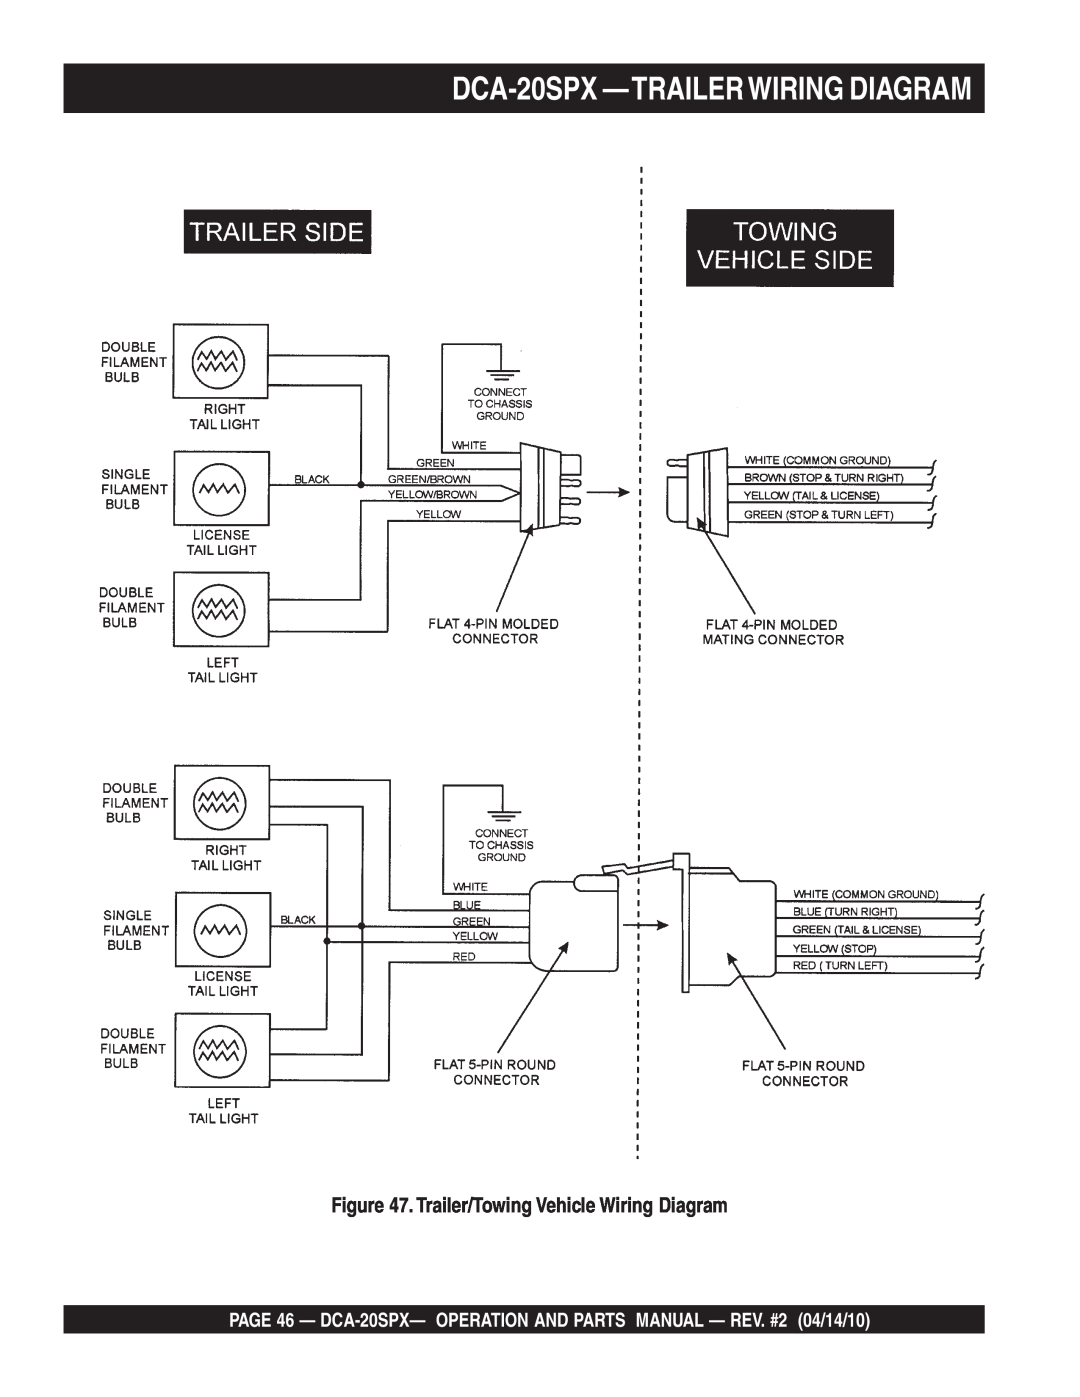 Multiquip operation manual DCA-20SPX -TRAILERWIRING DIAGRAM, Trailer/Towing Vehicle Wiring Diagram 